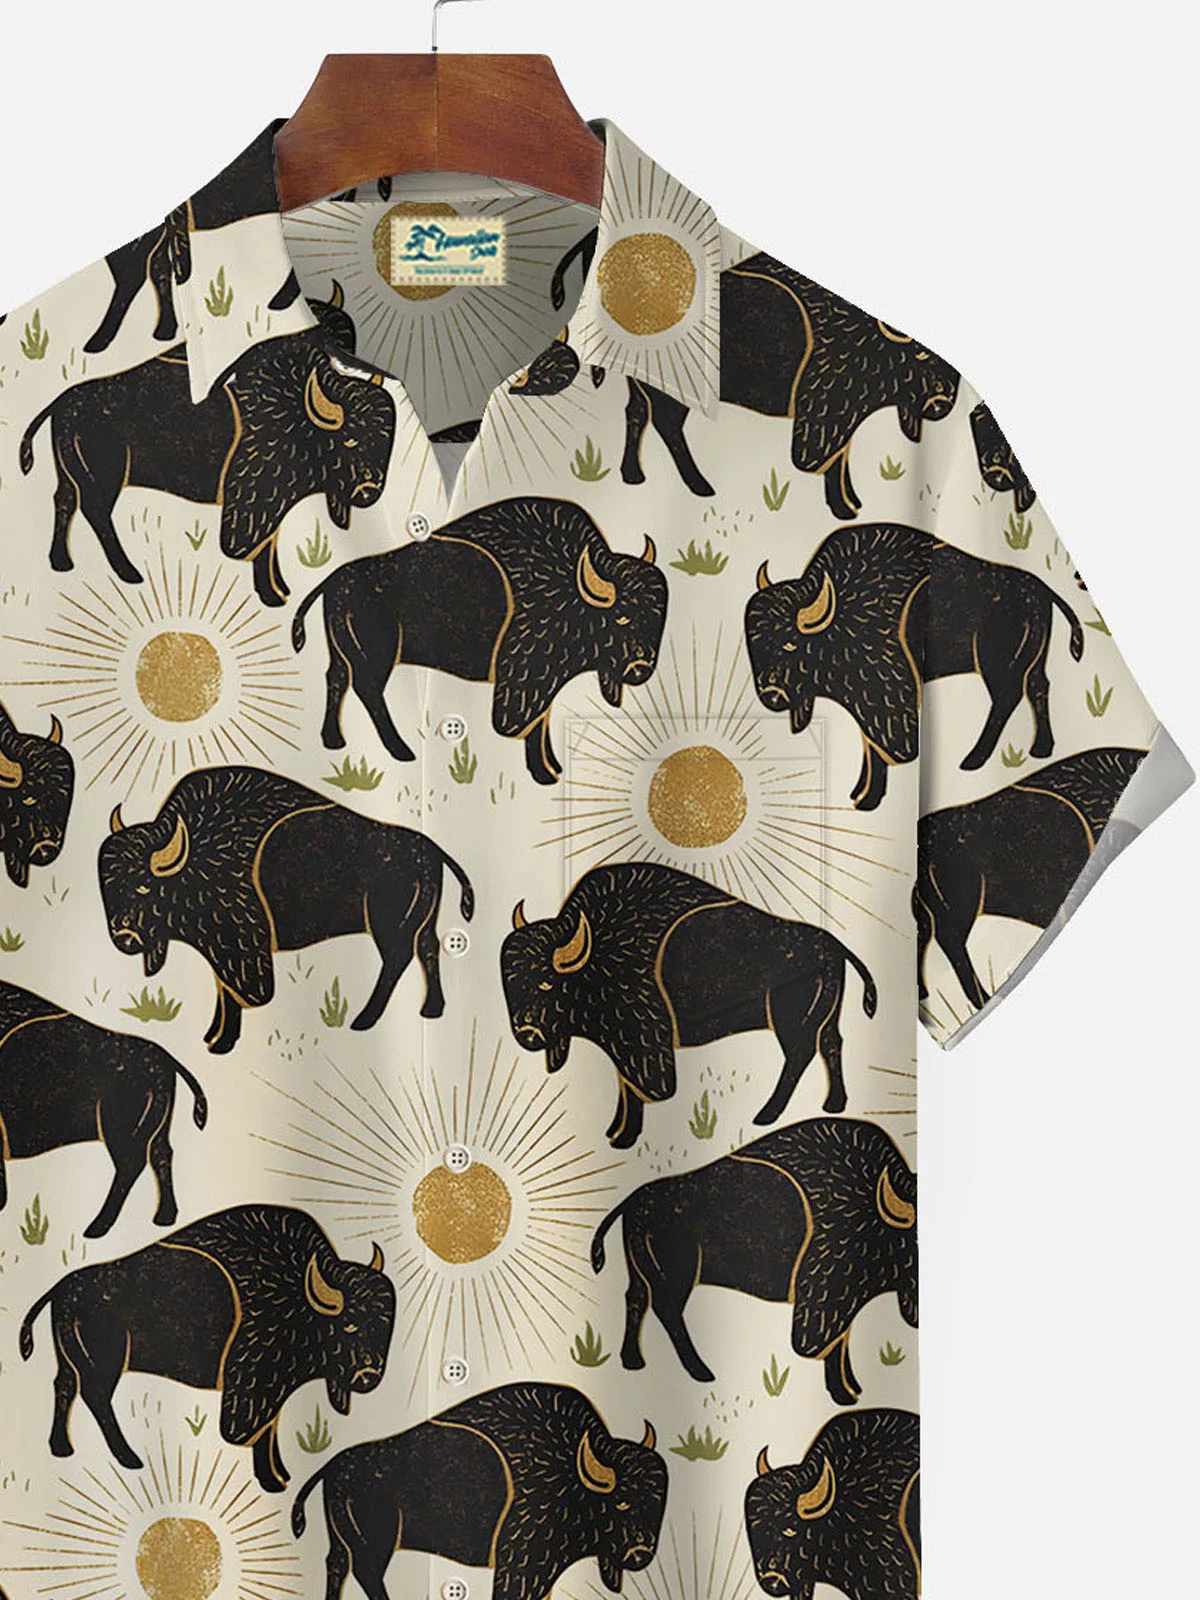 Royaura Vintage Bull Print Men's Button Pocket Shirt